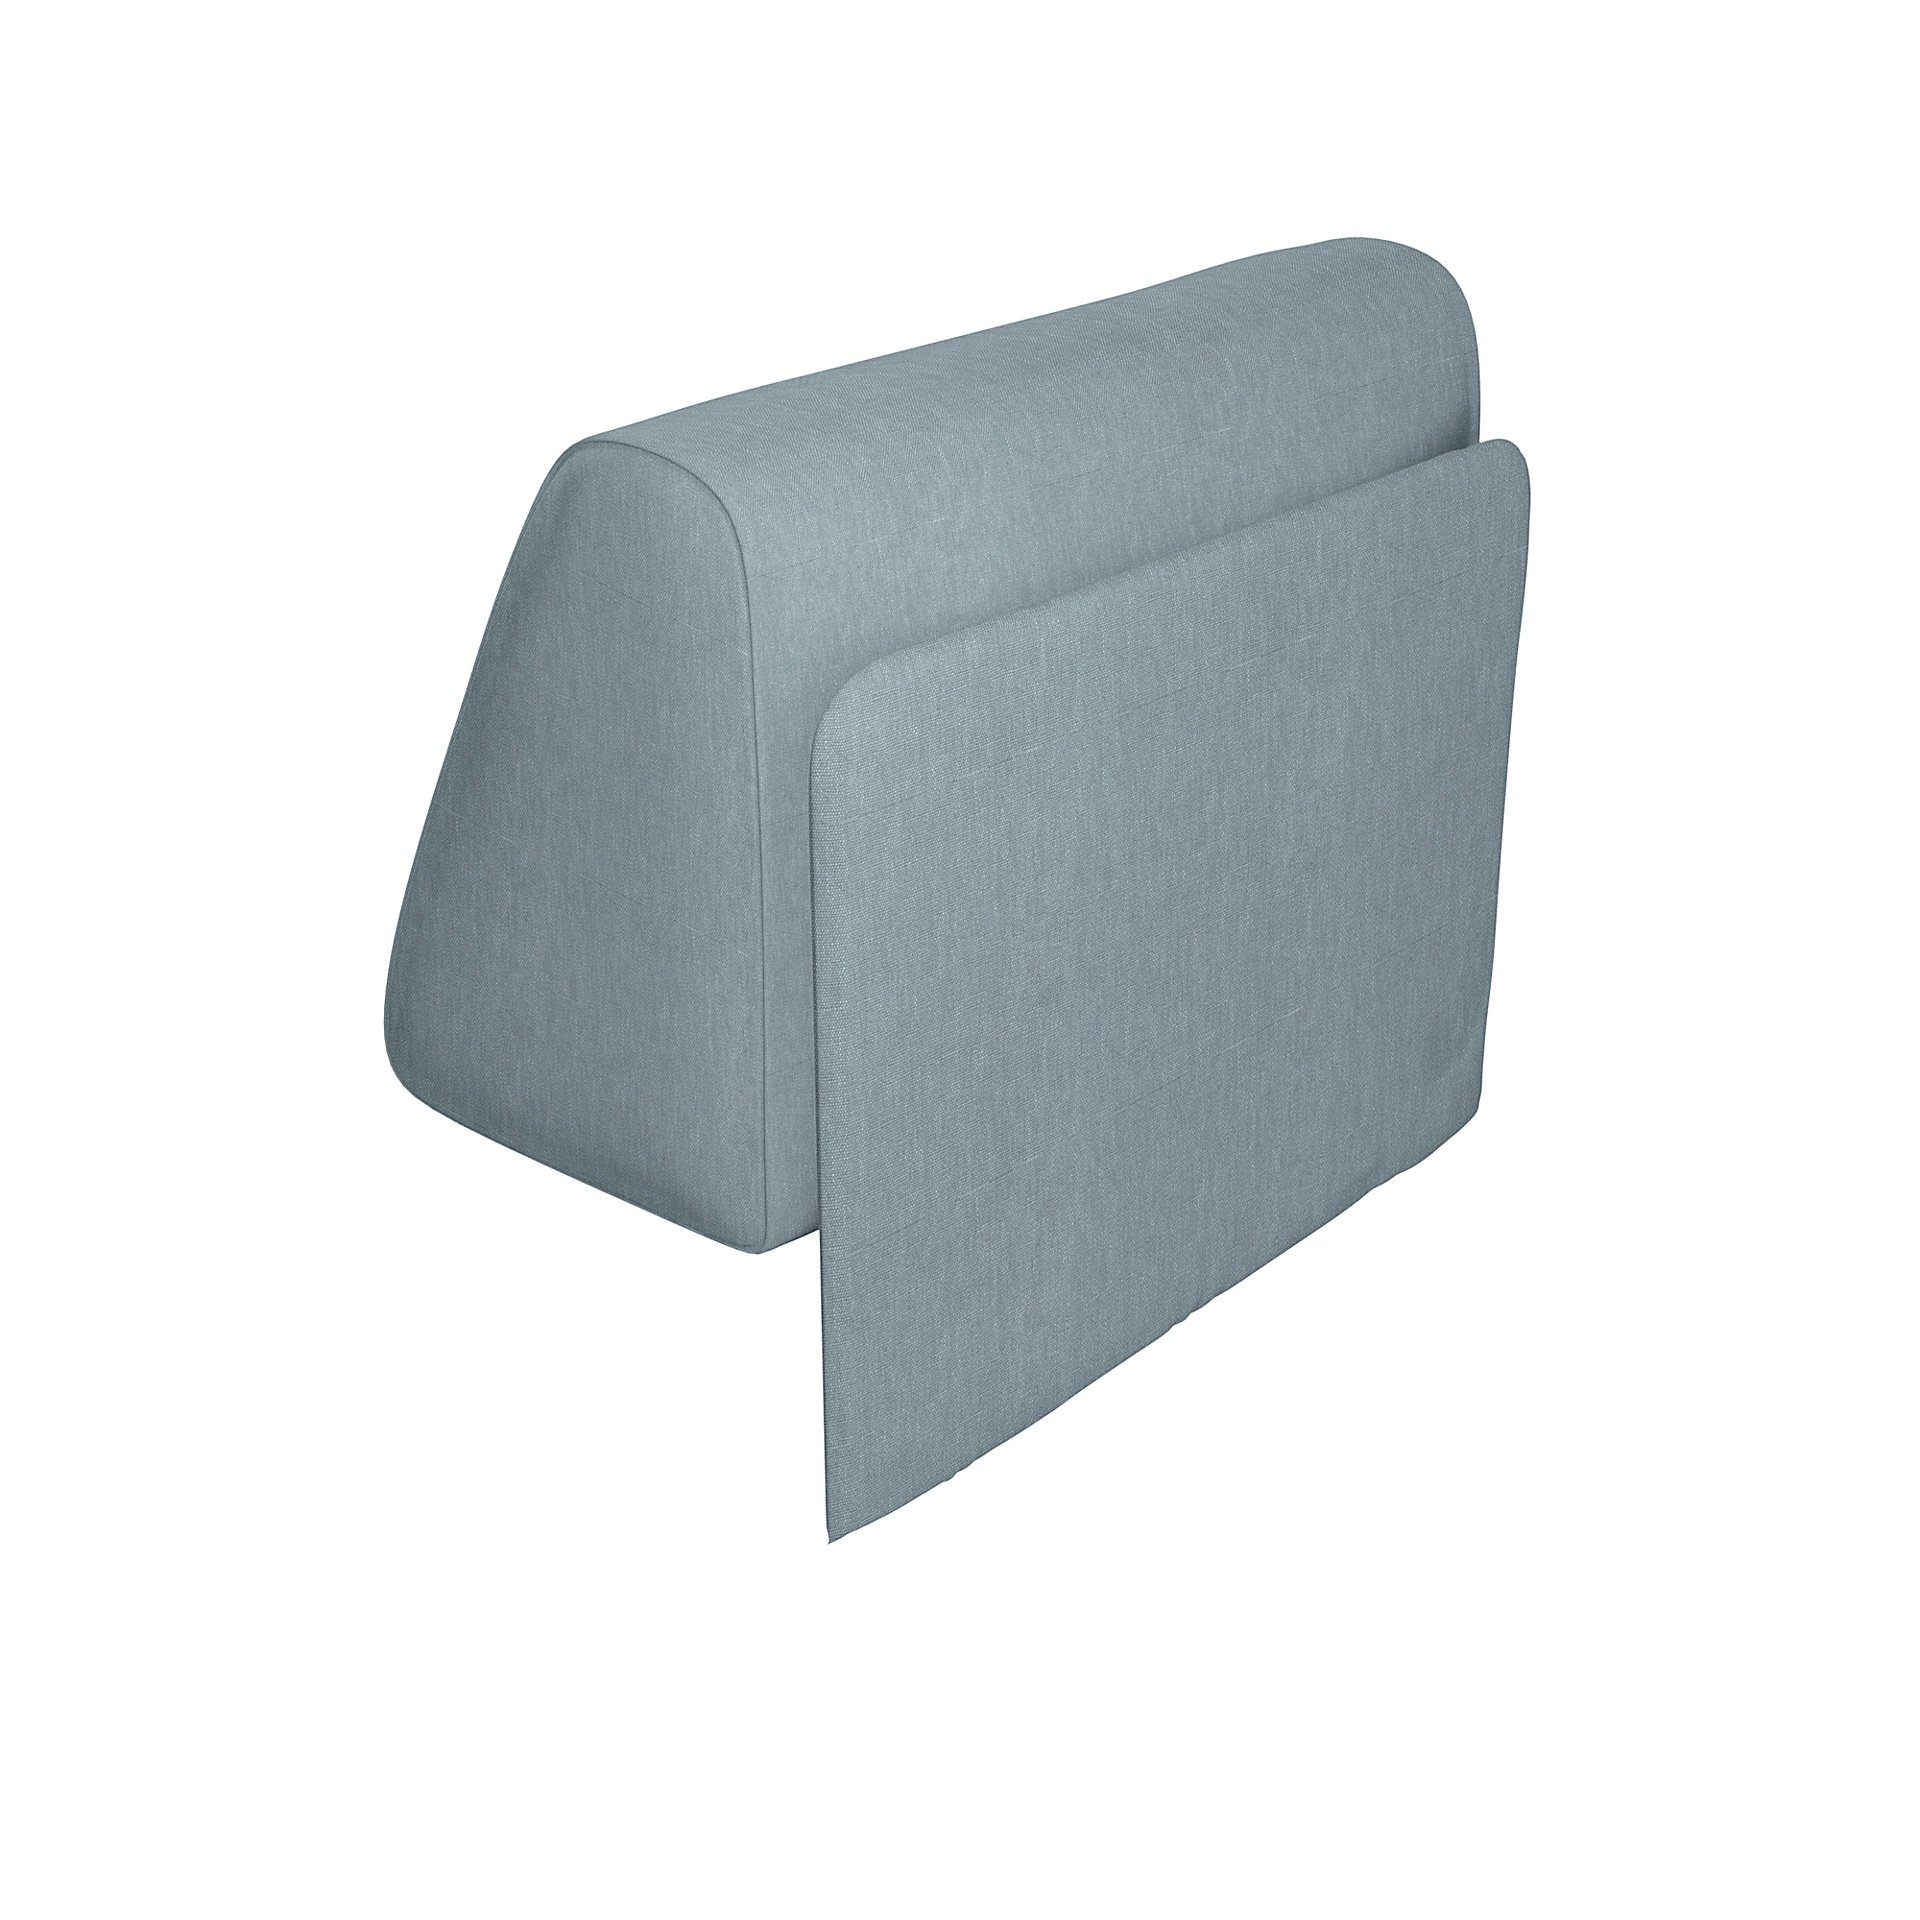 IKEA - Delaktig Backrest with Cushion Cover, Dusty Blue, Linen - Bemz